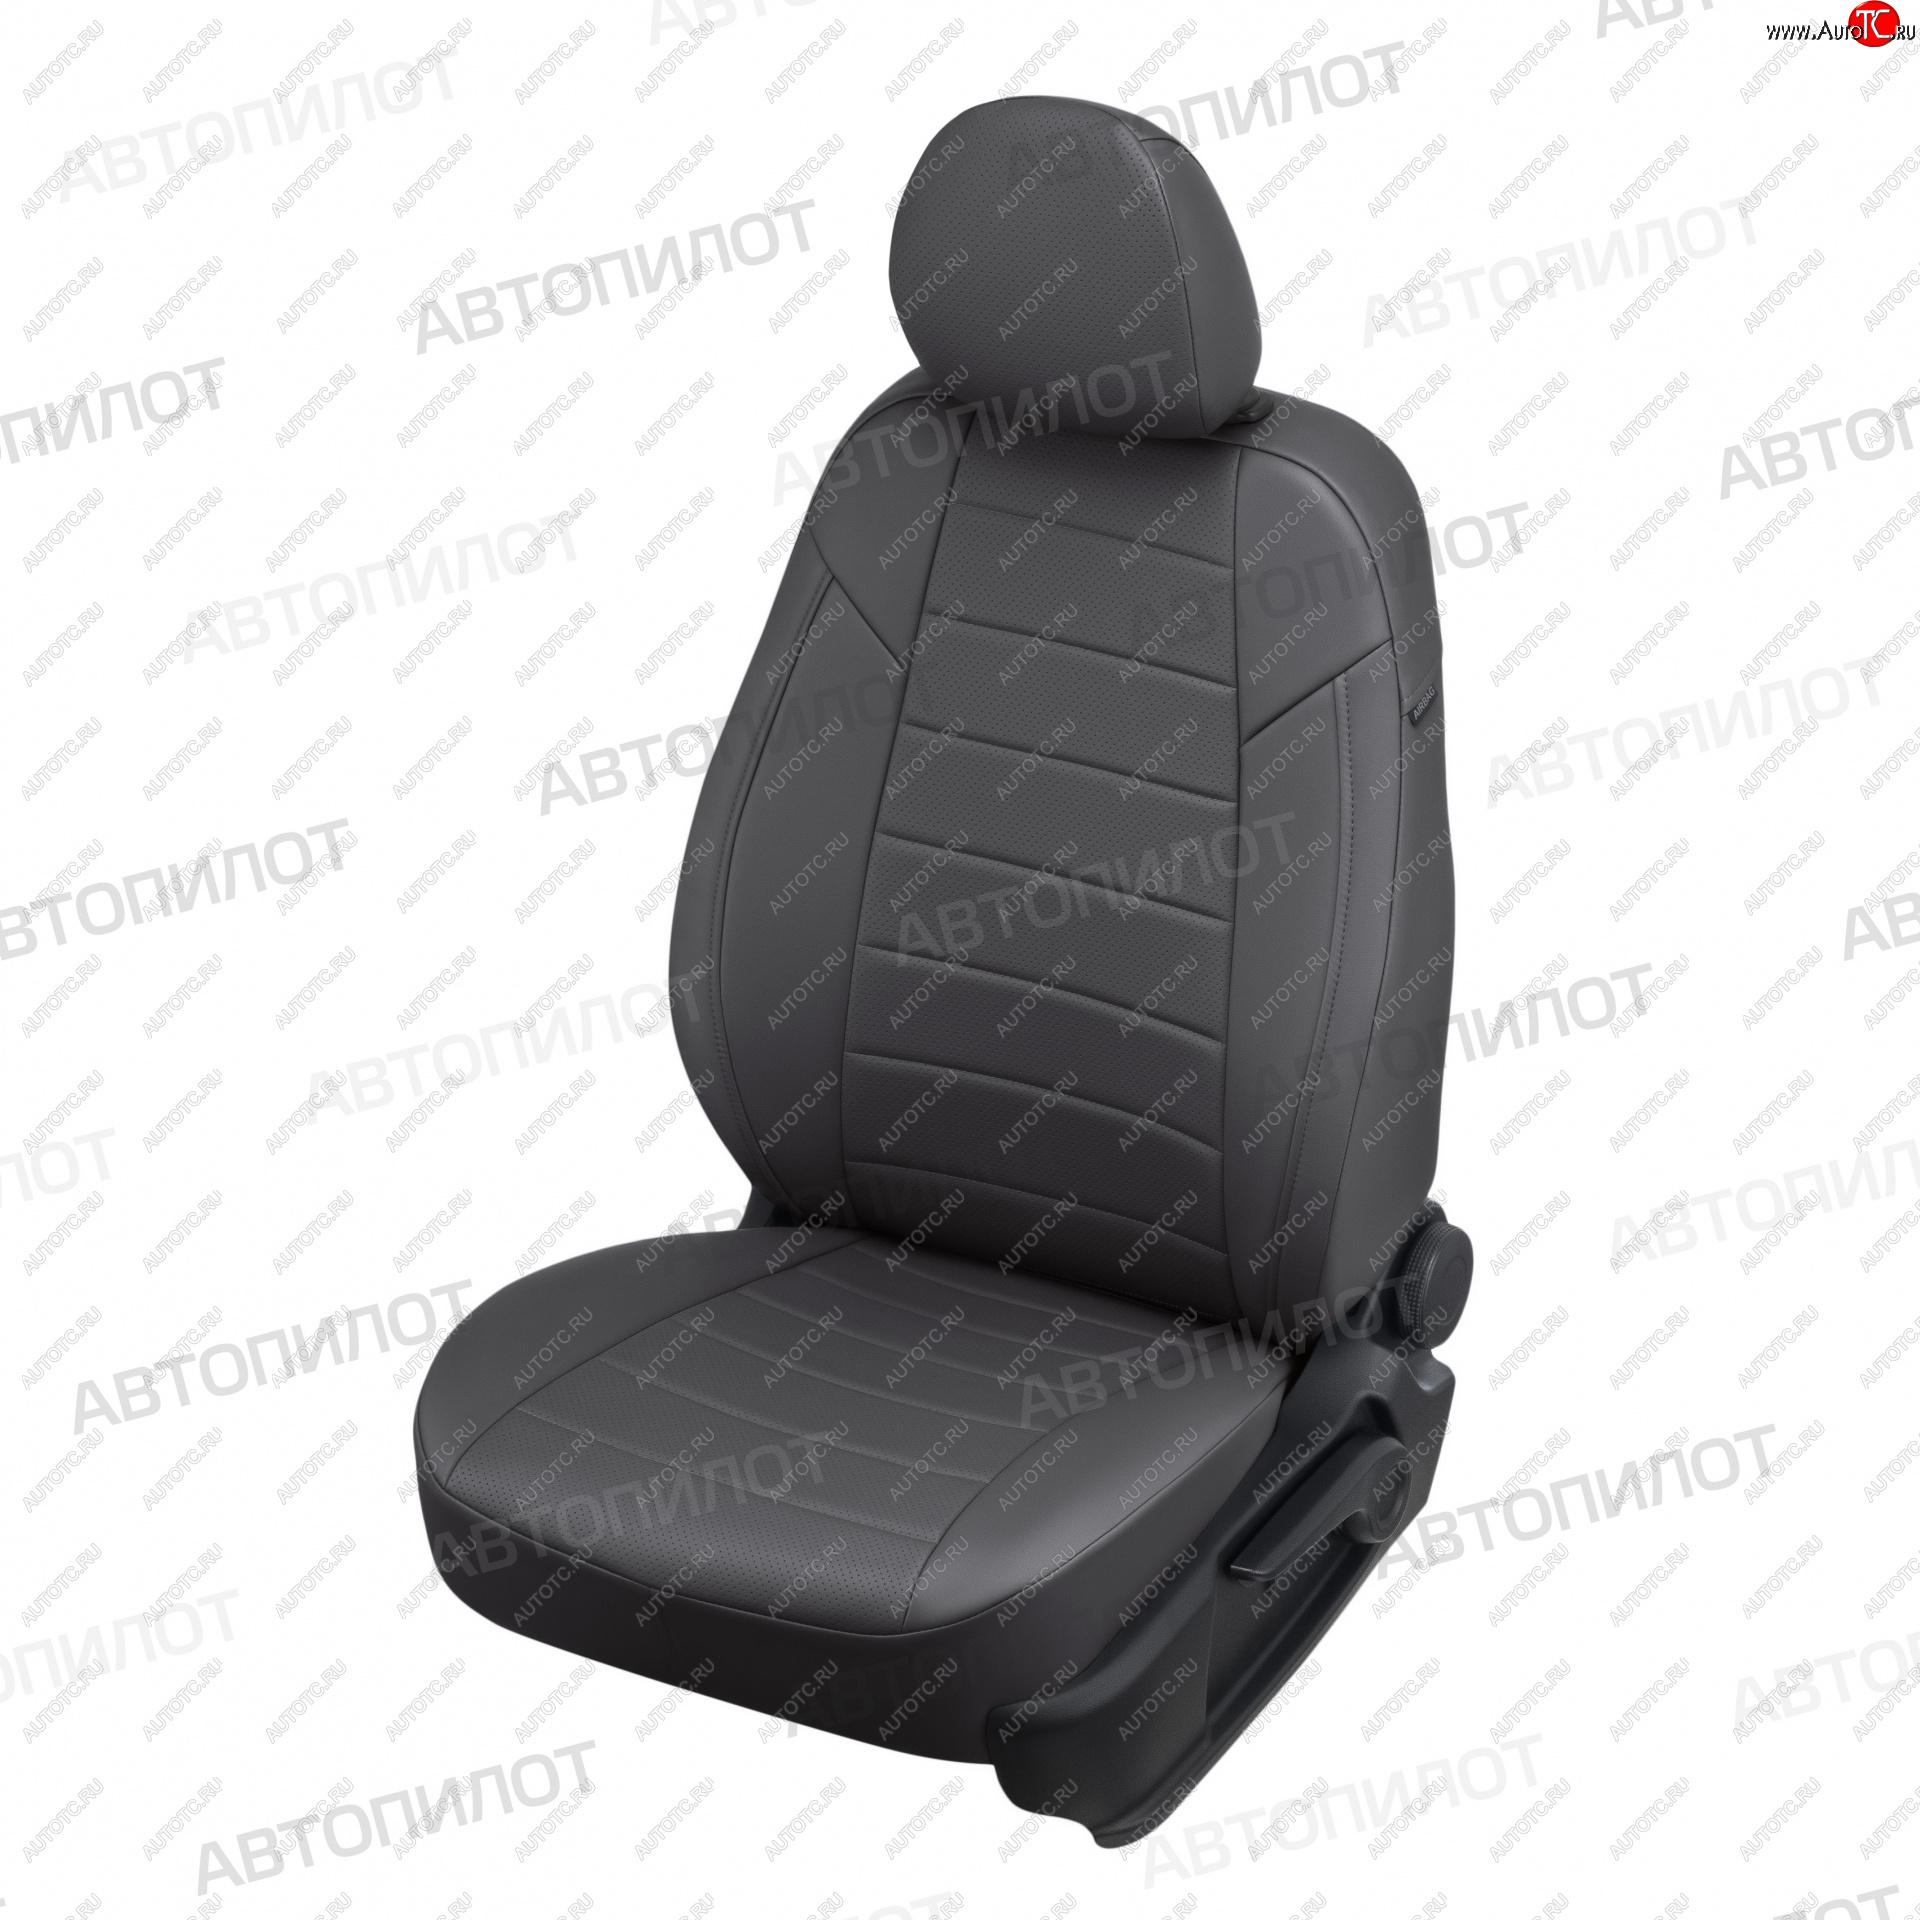 13 849 р. Чехлы сидений (5 мест, экокожа) Автопилот  Ford Galaxy  WGR (1995-2006) (темно-серый)